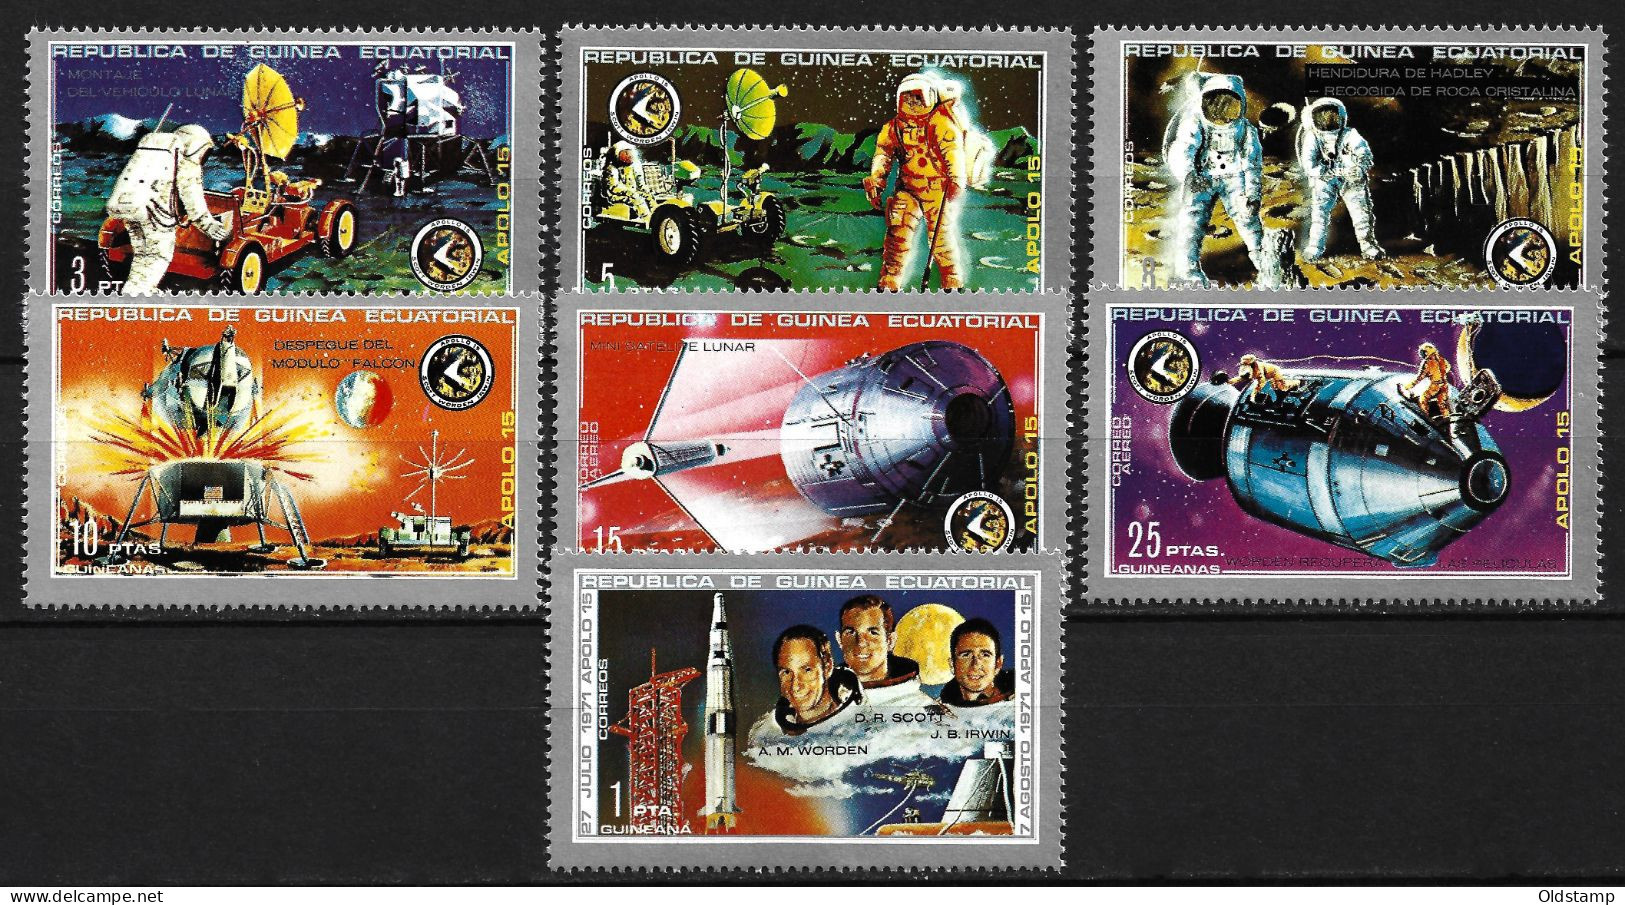 SPACE GUINEA 1972 MNH Full Set Mi. 18 - 24 APOLLO SHIP ASTRONAUTS Stamps Guinée équatoriale Guinea - Collections